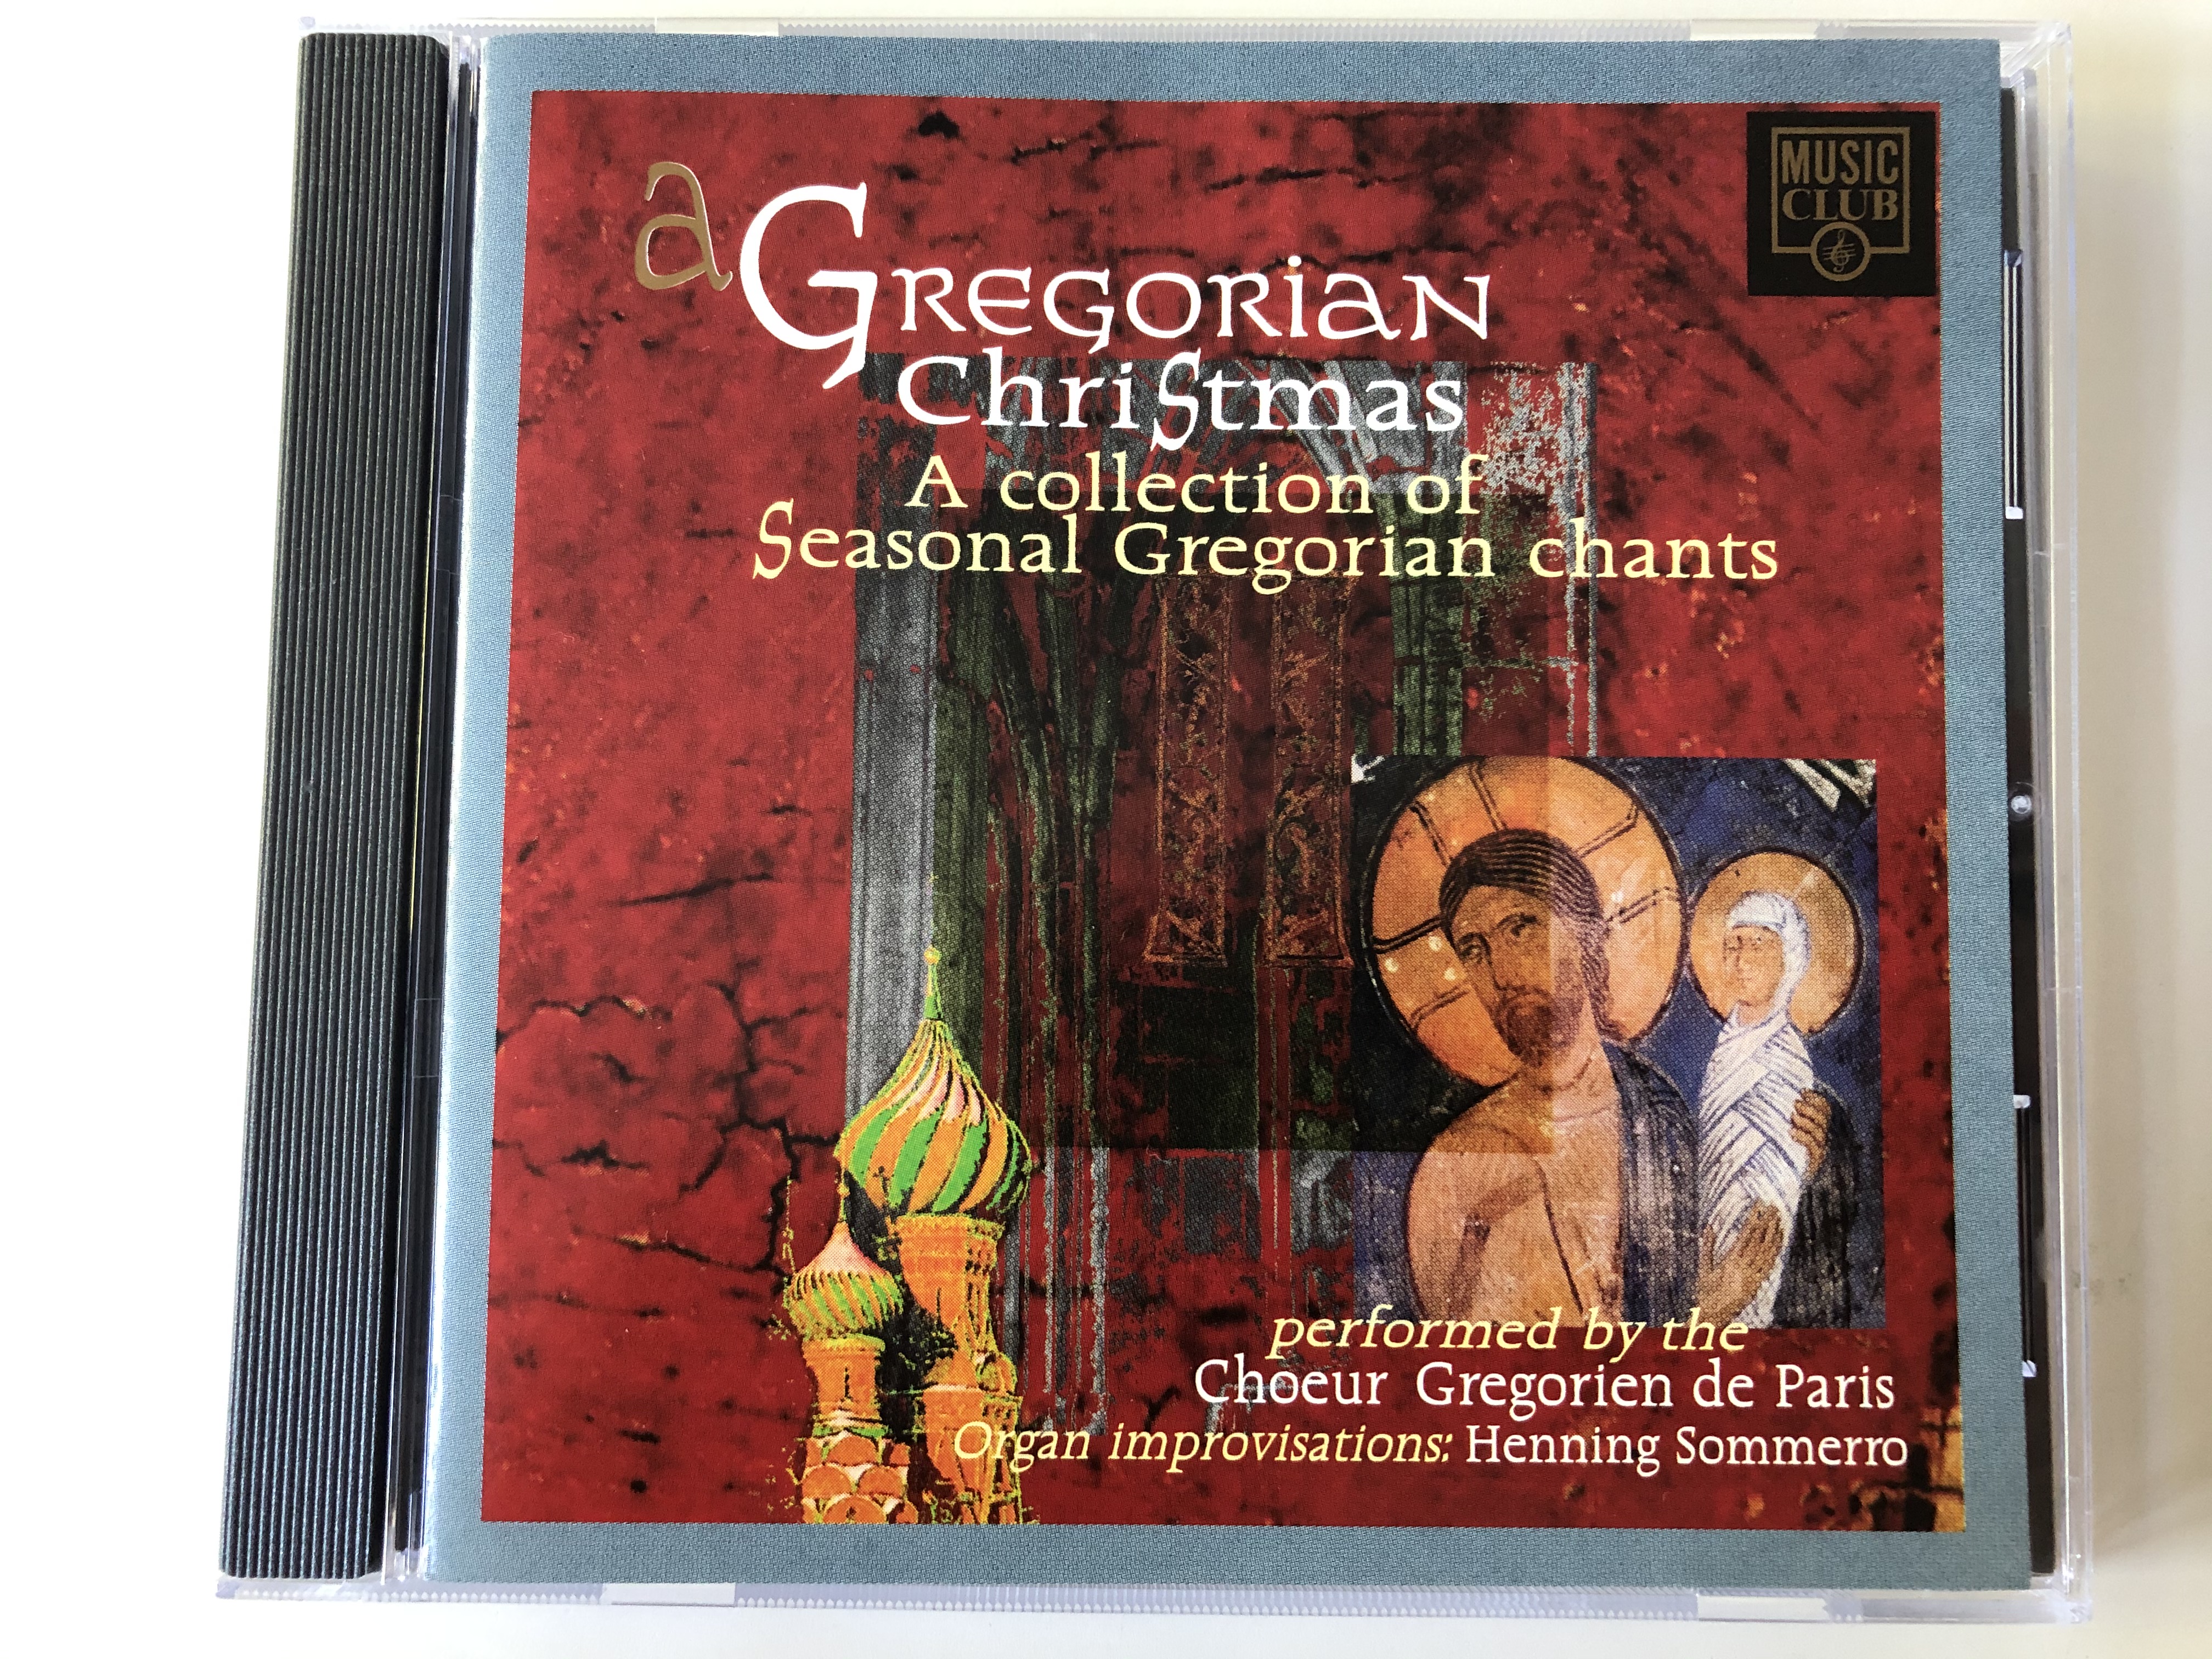 a-gregorian-christmas-a-collection-of-seasonal-gregorian-chants-performed-by-the-choeur-gr-gorien-de-paris-organ-improvisations-henning-sommerro-music-club-audio-cd-1989-mccdx-006-1-.jpg